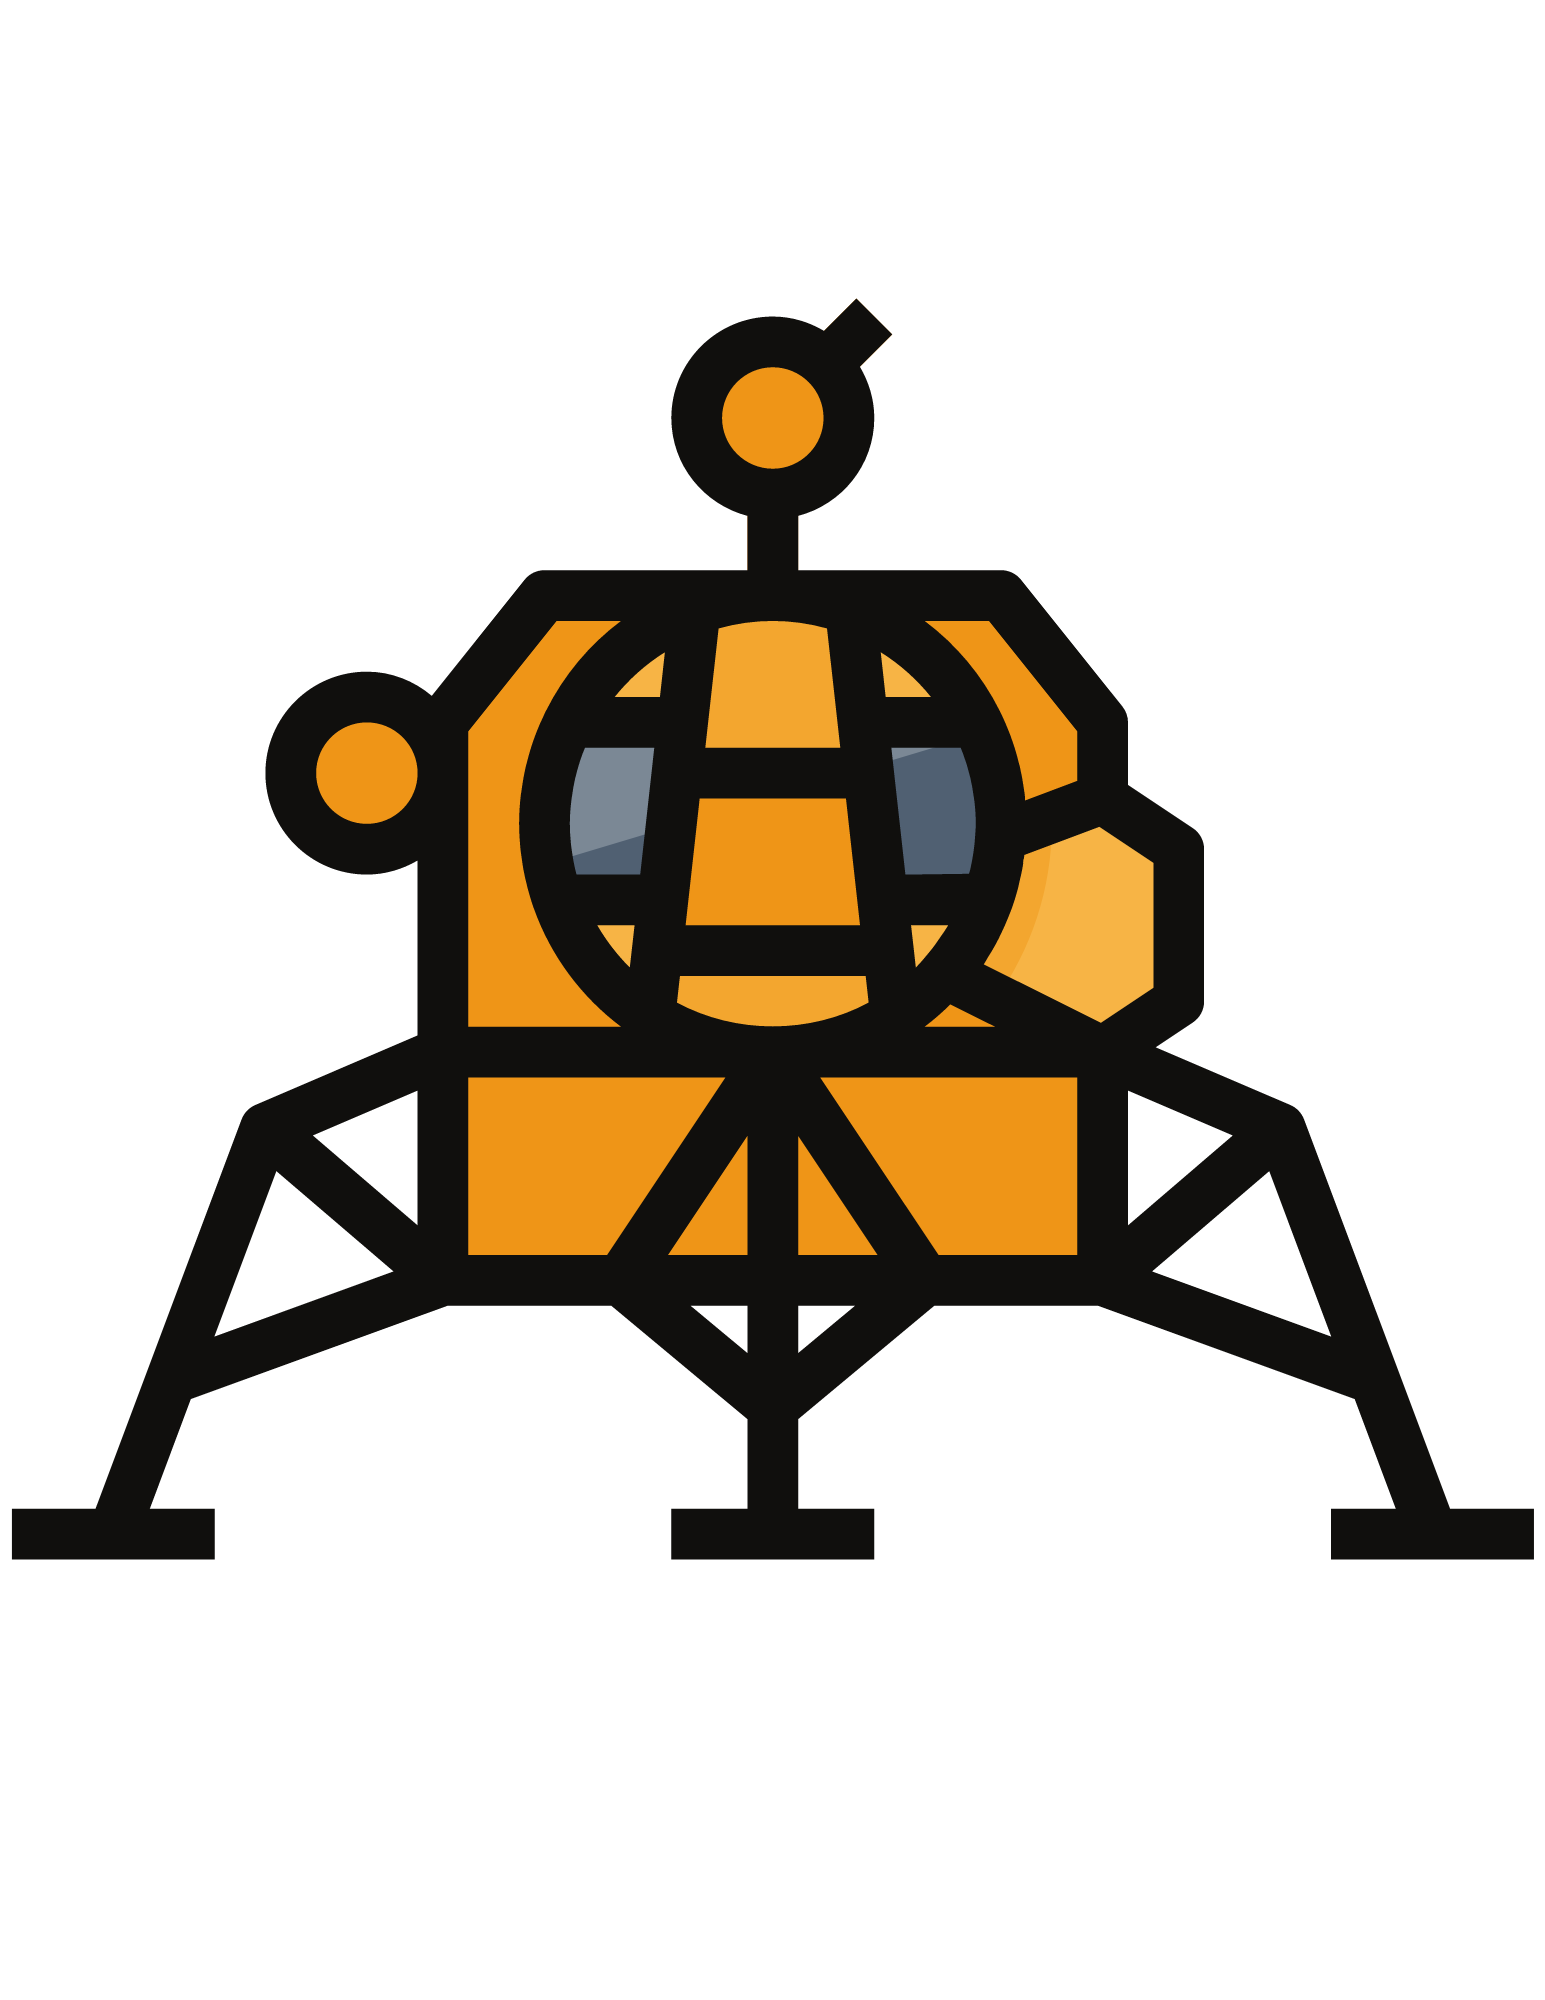 An orange cartoon space lander.